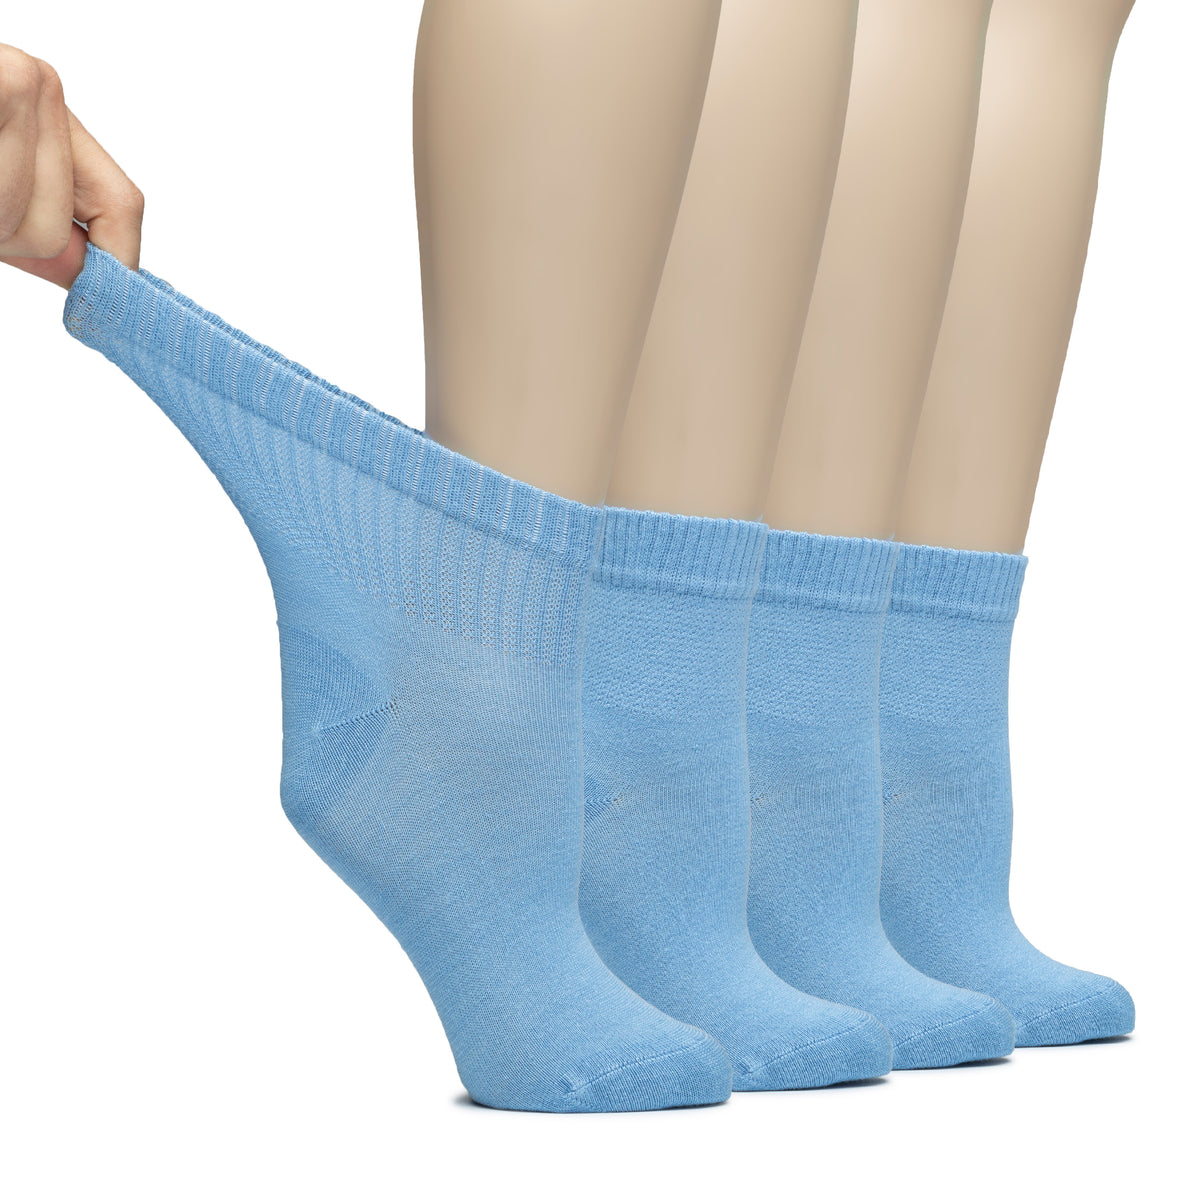 Hugh Ugoli Lightweight Women's Diabetic Ankle Socks Bamboo Thin Socks Seamless Toe and Non-Binding Top, 4 Pairs, , Shoe Size: 6-9/10-12 | Shoe Size: 6-9 | Bombay Brown